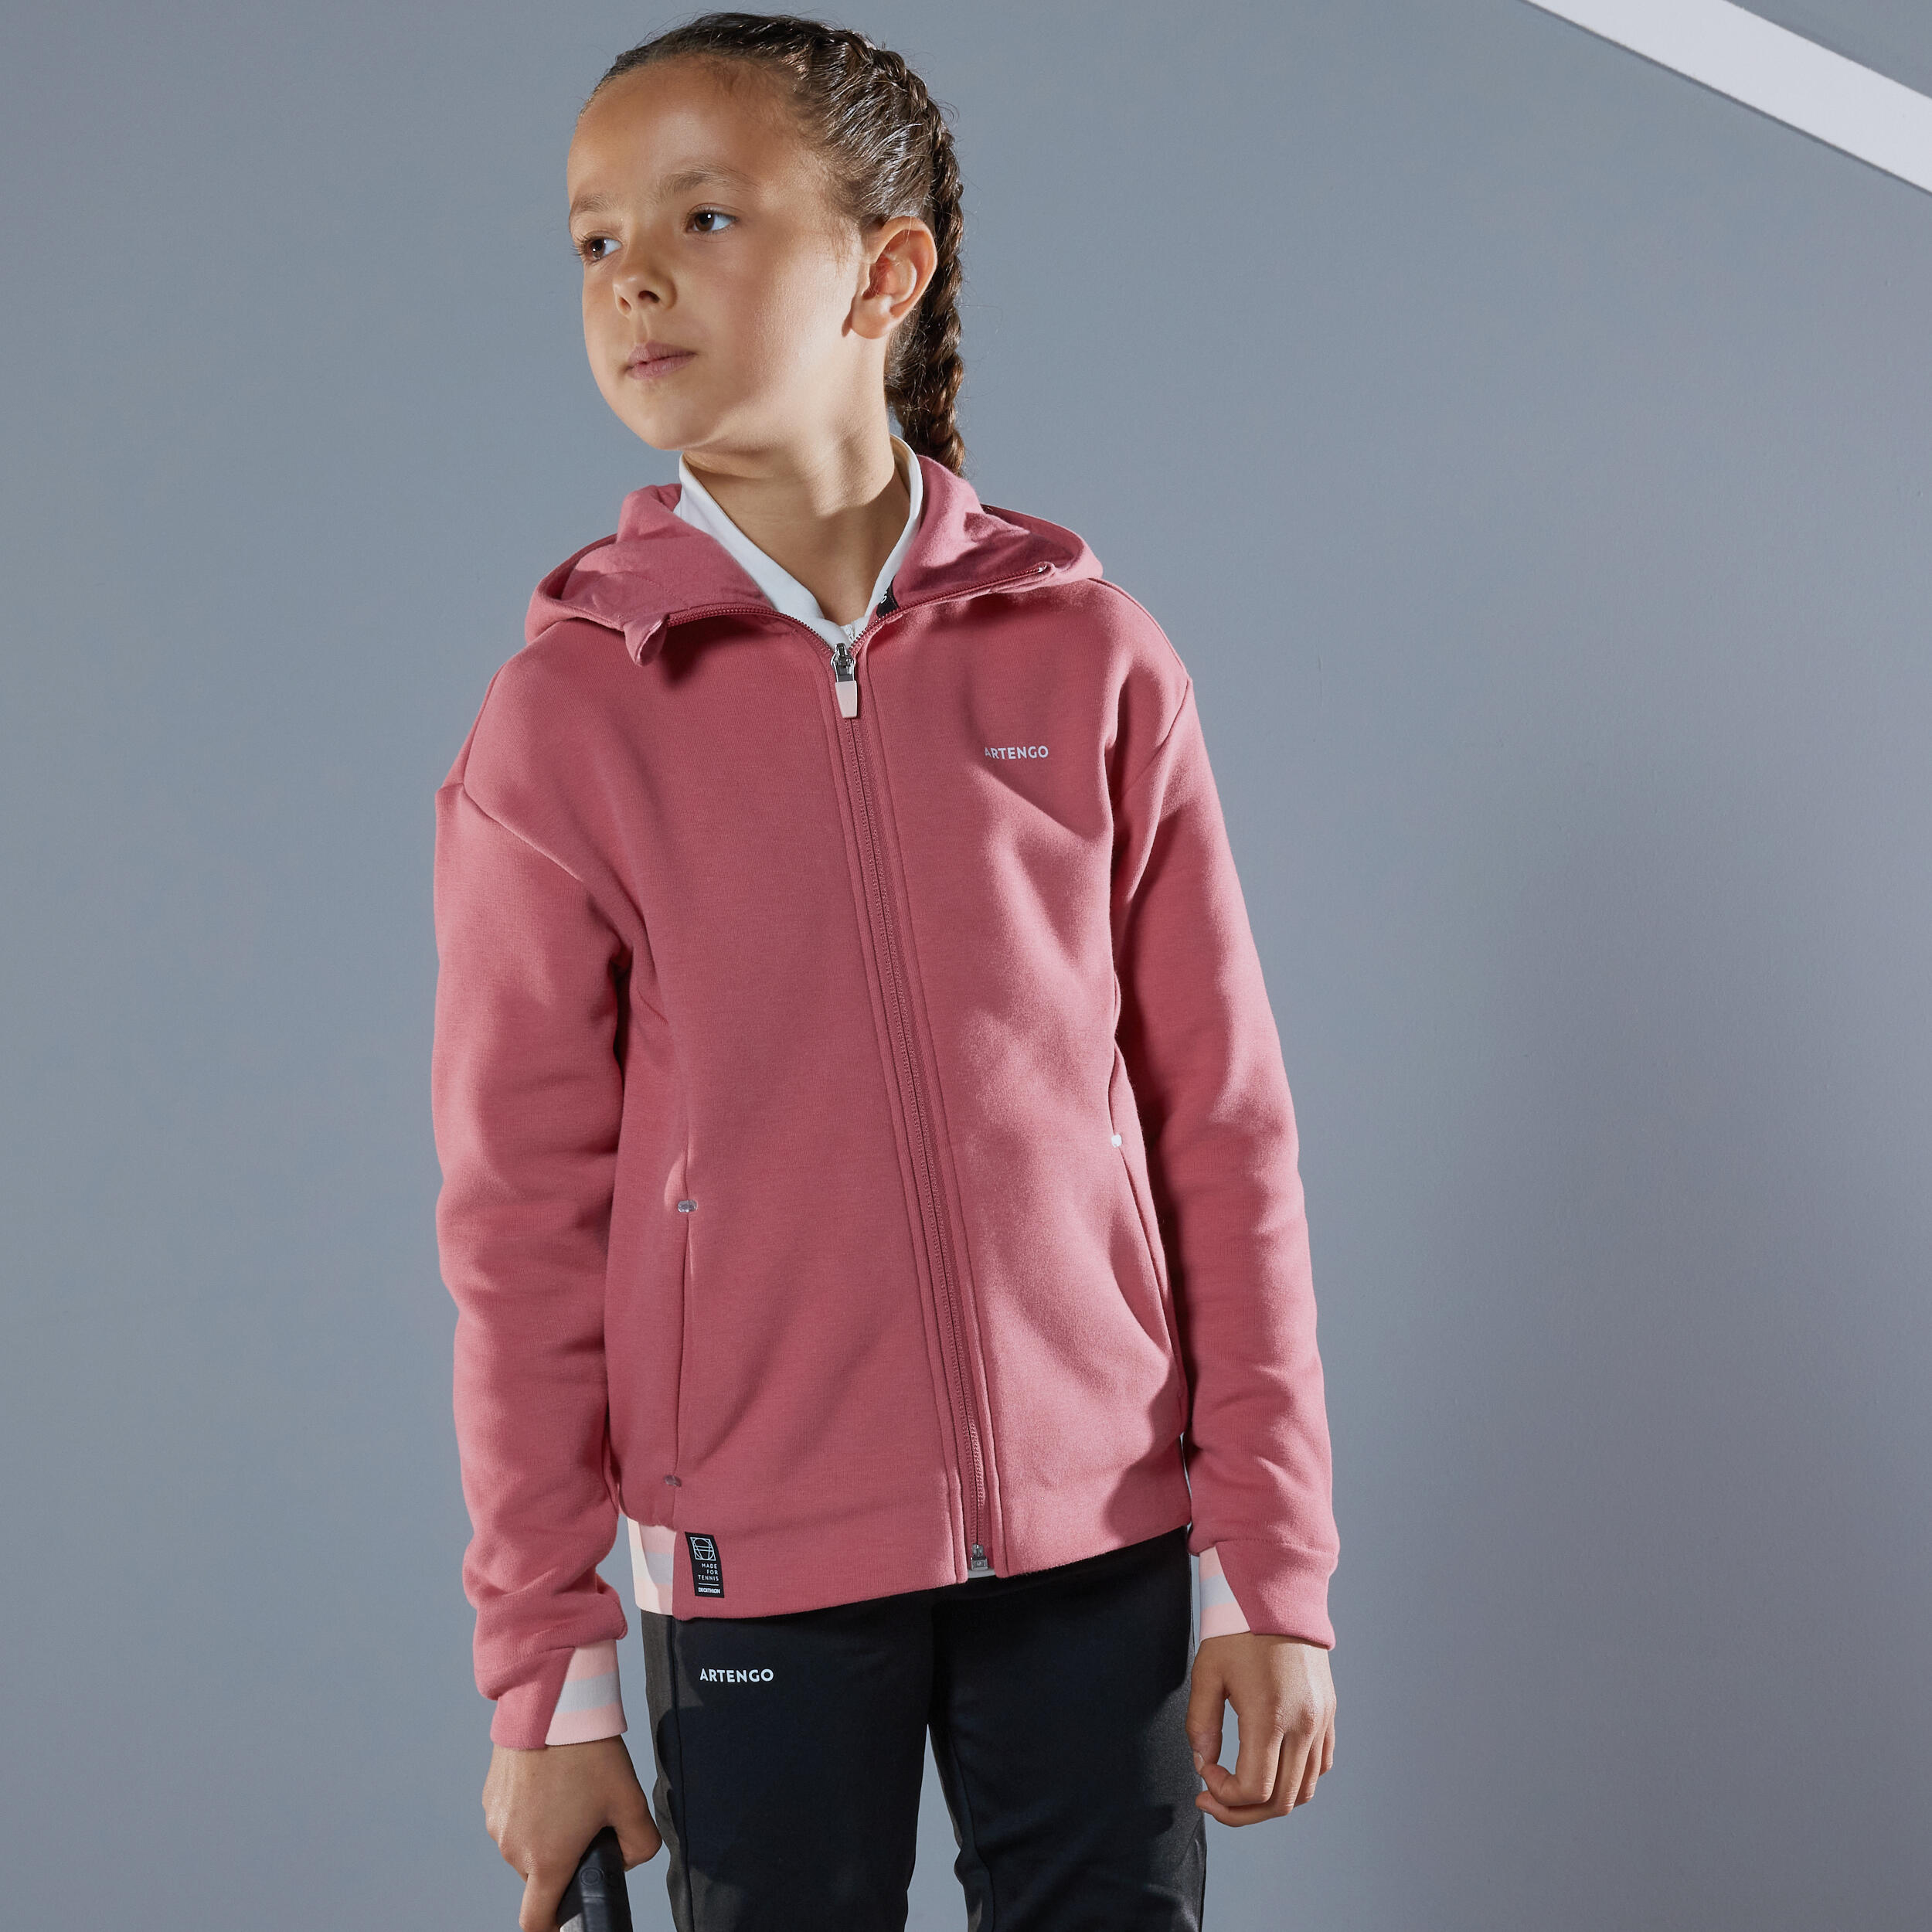 ARTENGO Girls' Thermal Tennis Jacket - Antique Pink